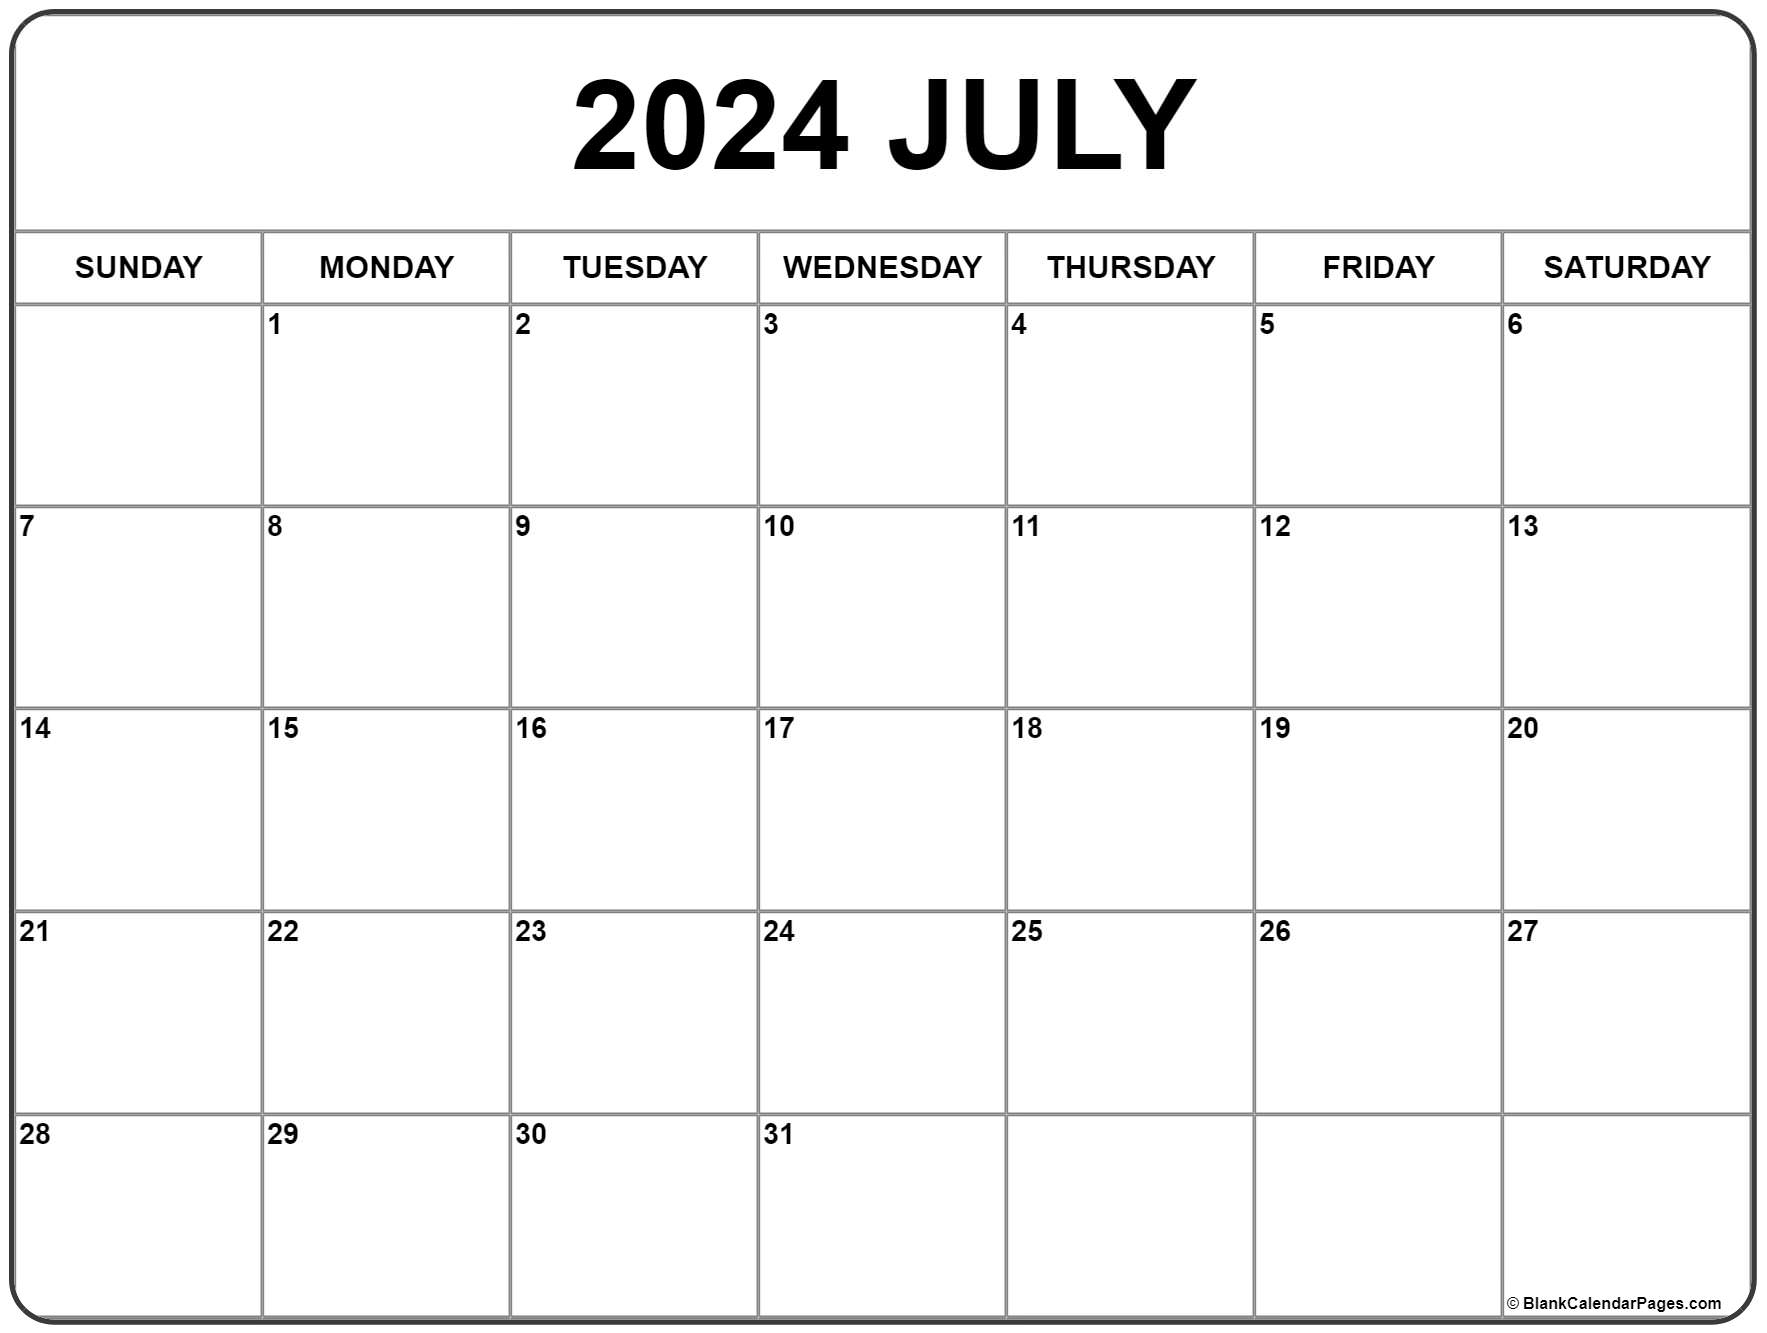 Blank Calendar July 2021 July 2021 calendar | free printable monthly calendars